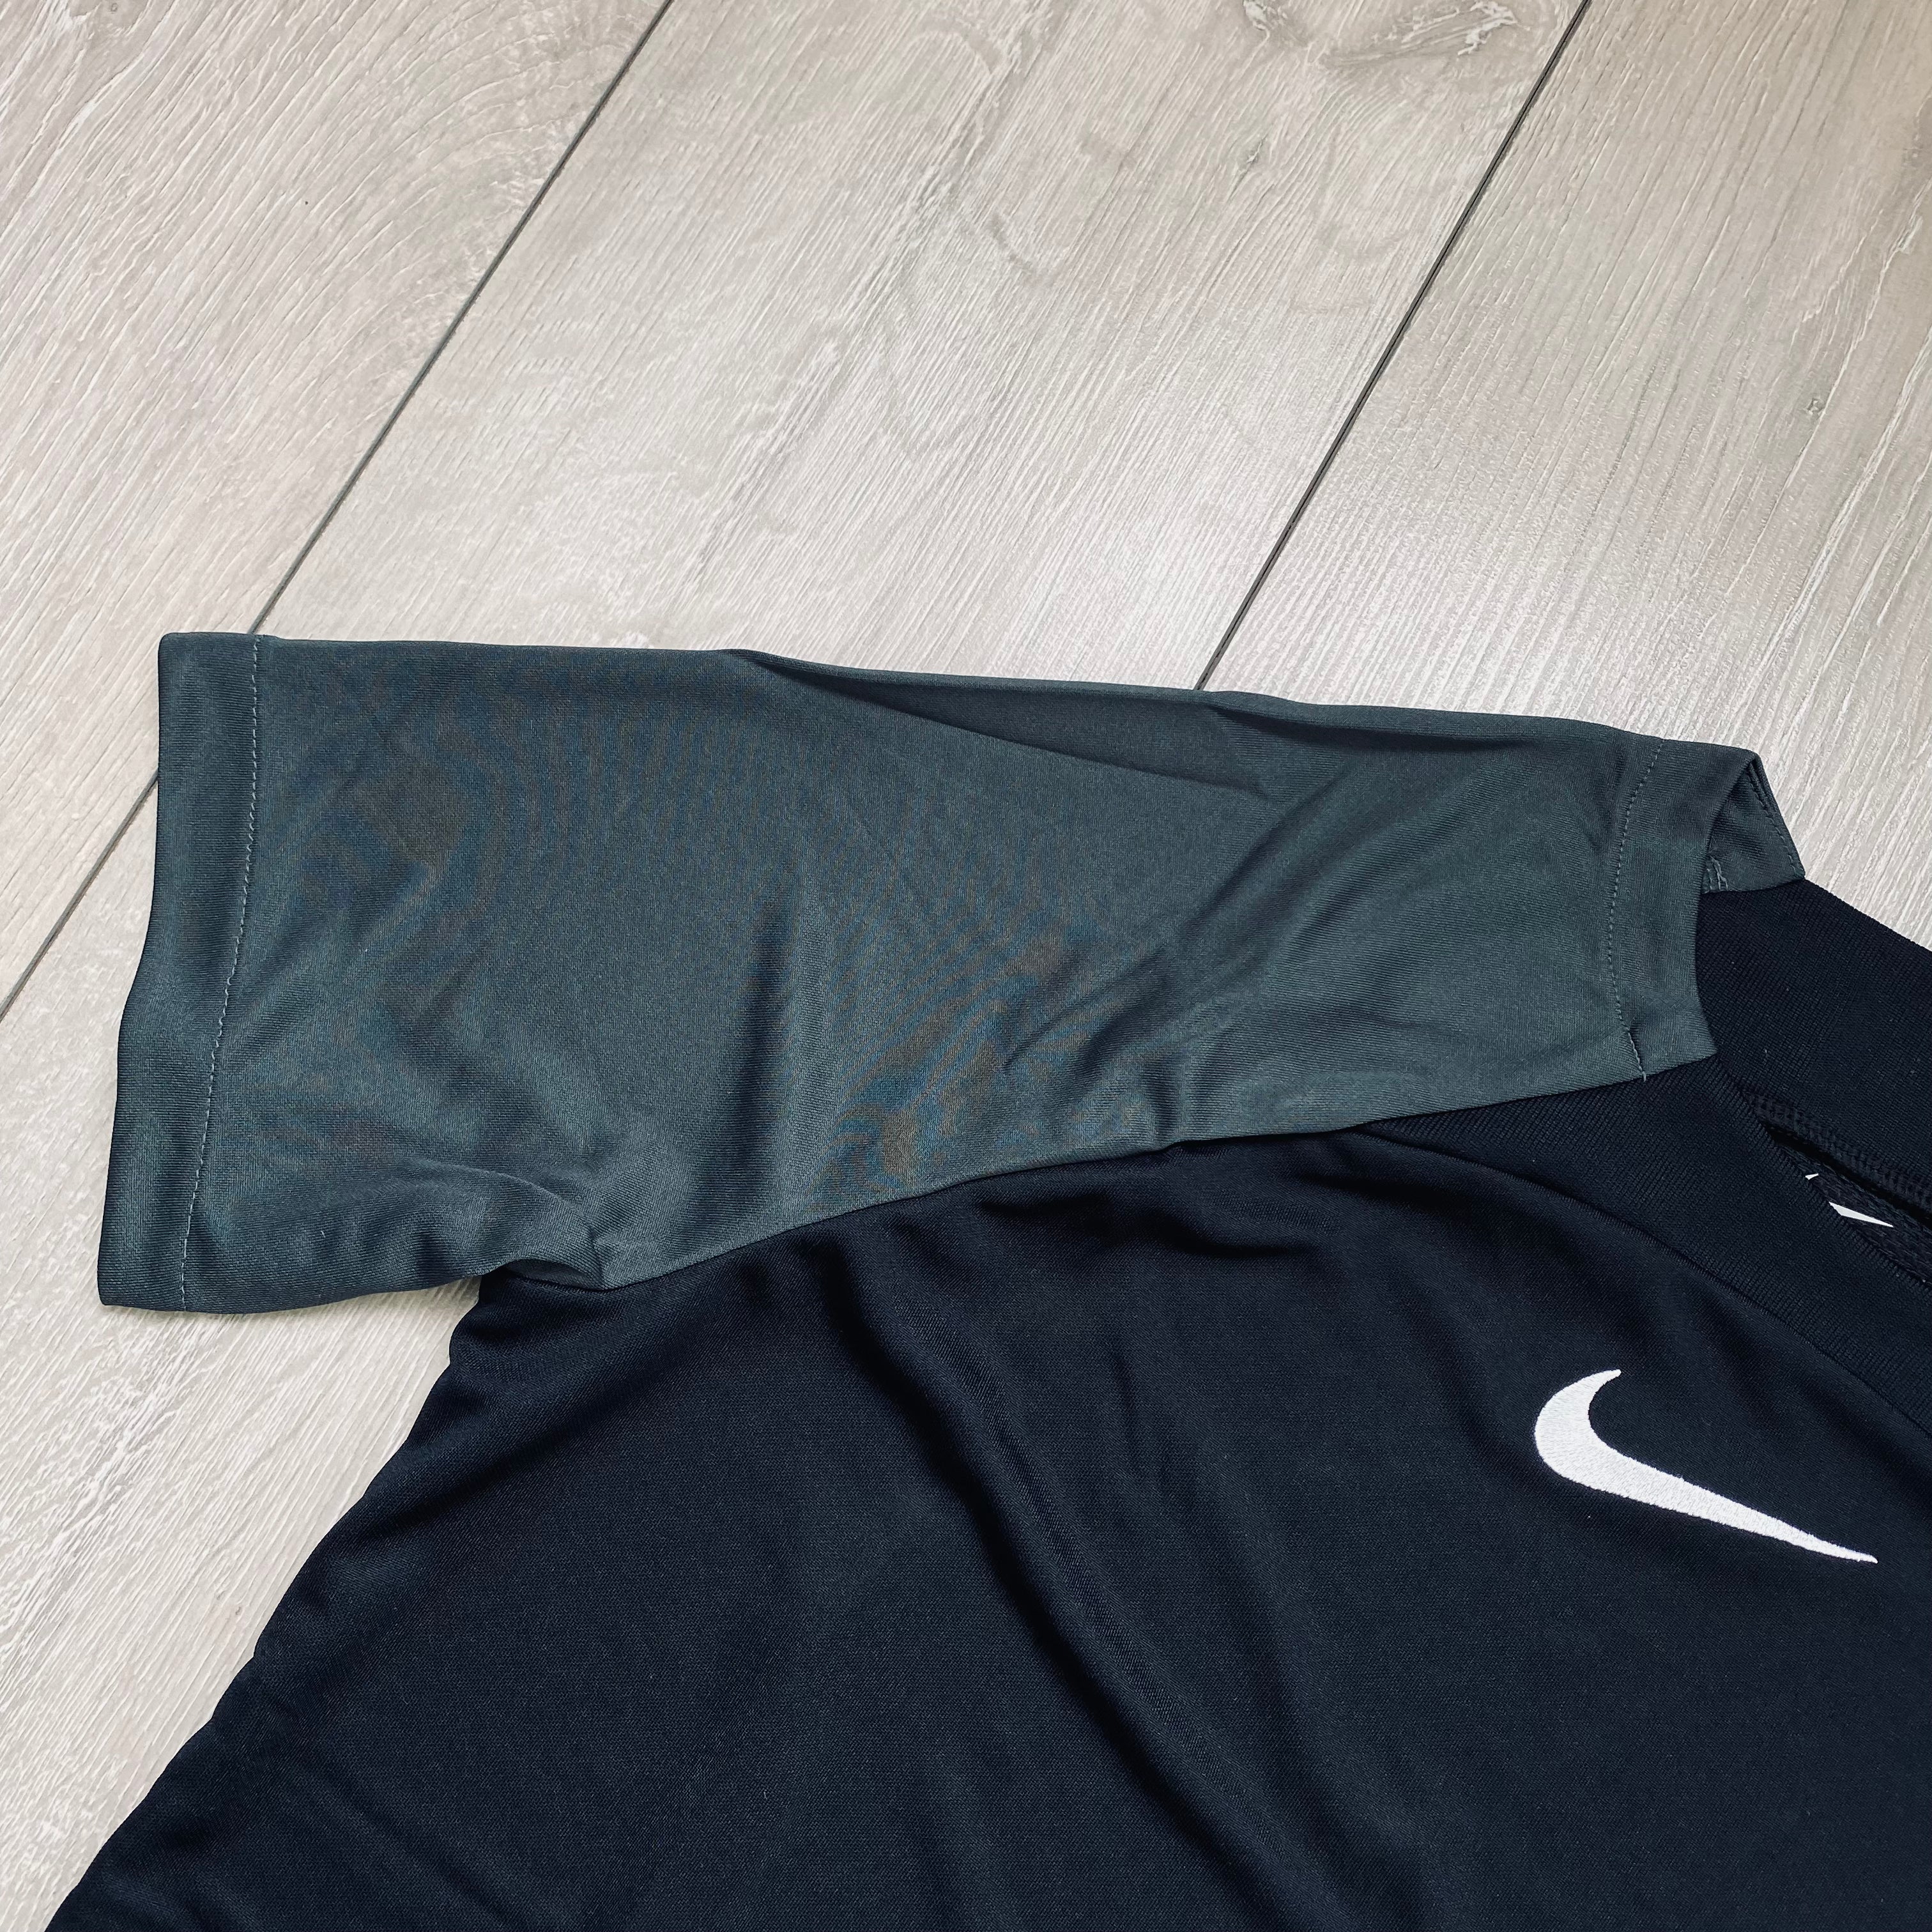 Nike Dri-Fit T-Shirt - Anthracite